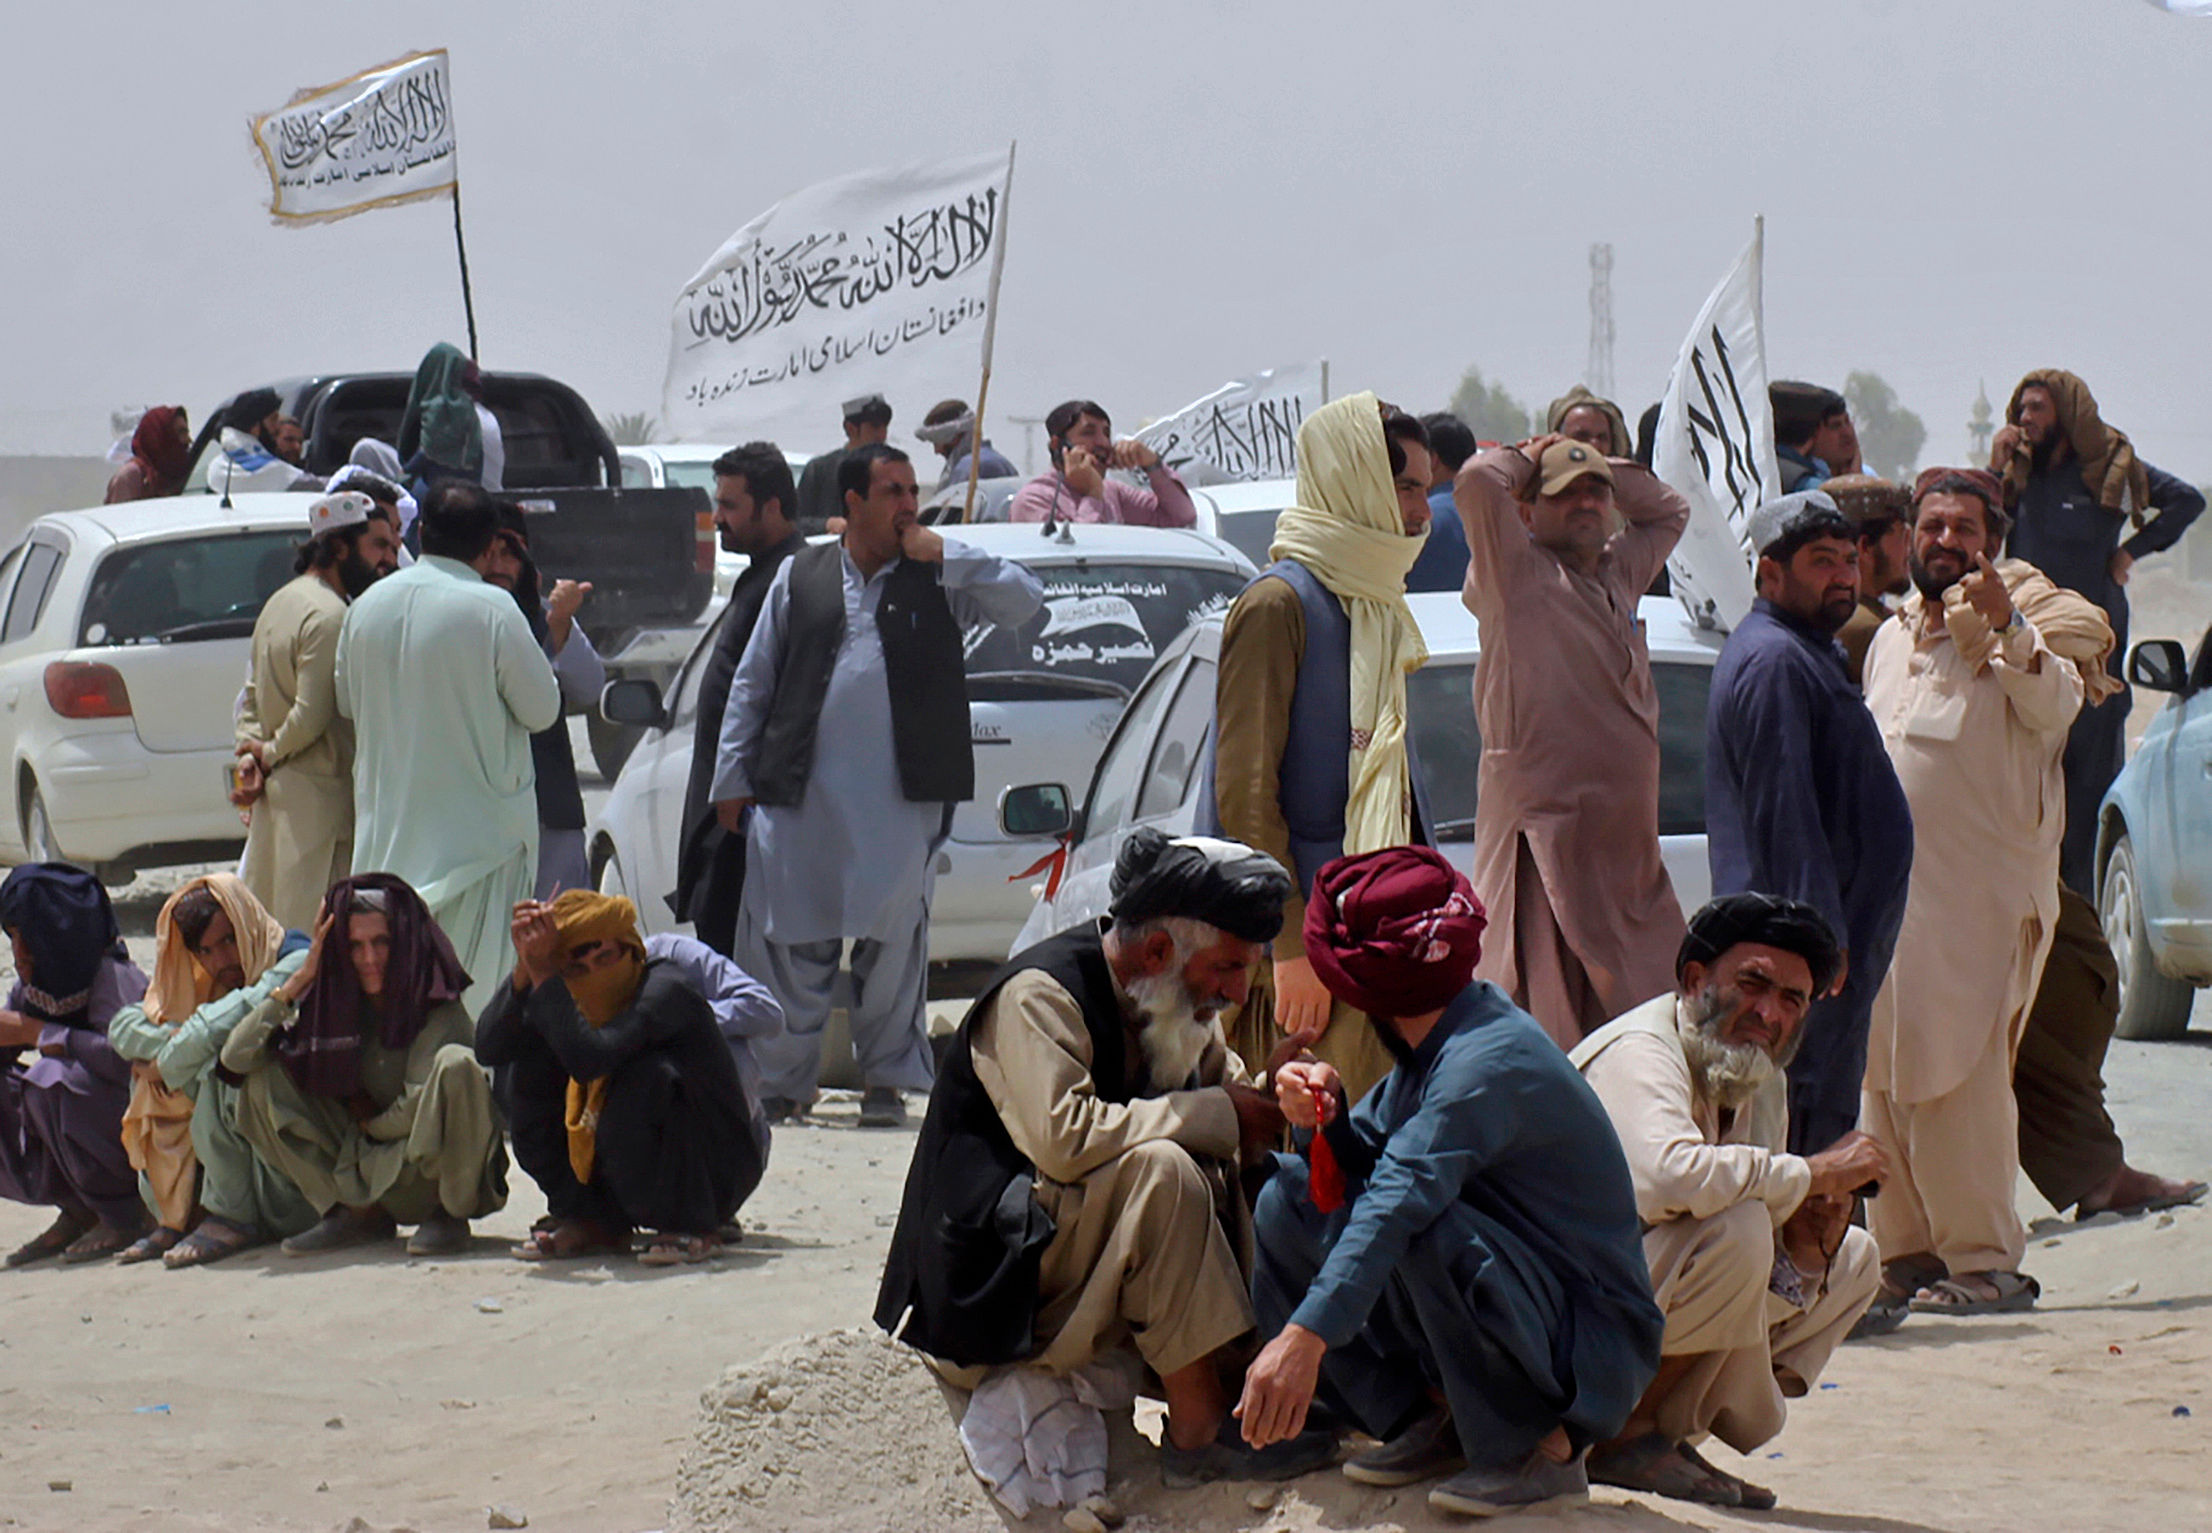 Facebook, Twitter other platforms look at ways to keep Taliban away